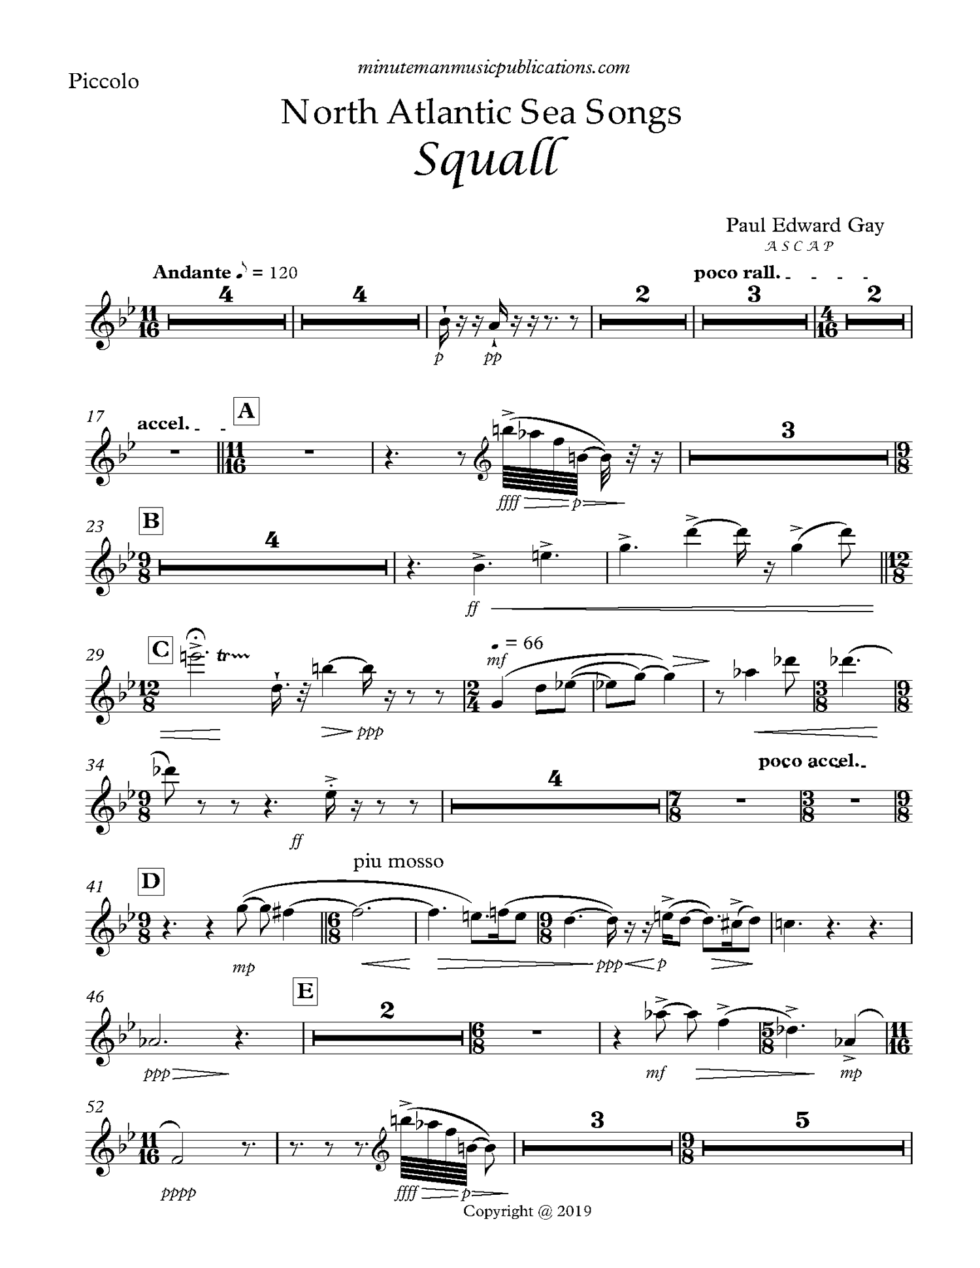 North Atlantic Sea Songs: Squall (Parts)